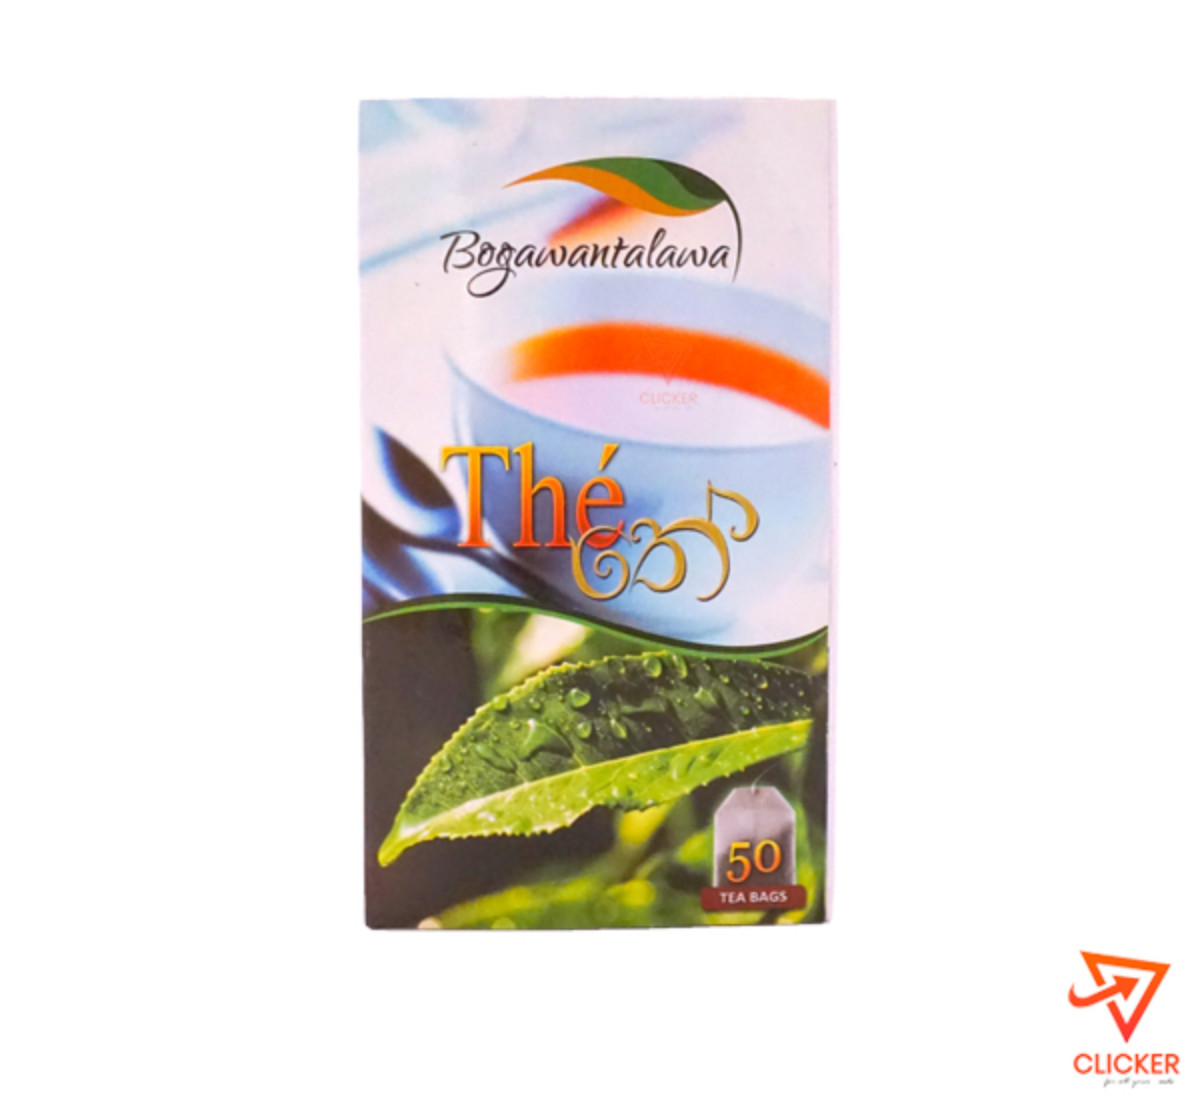 Clicker product 100g BOGAWANTALAWA Tea(50 tea bags) 922